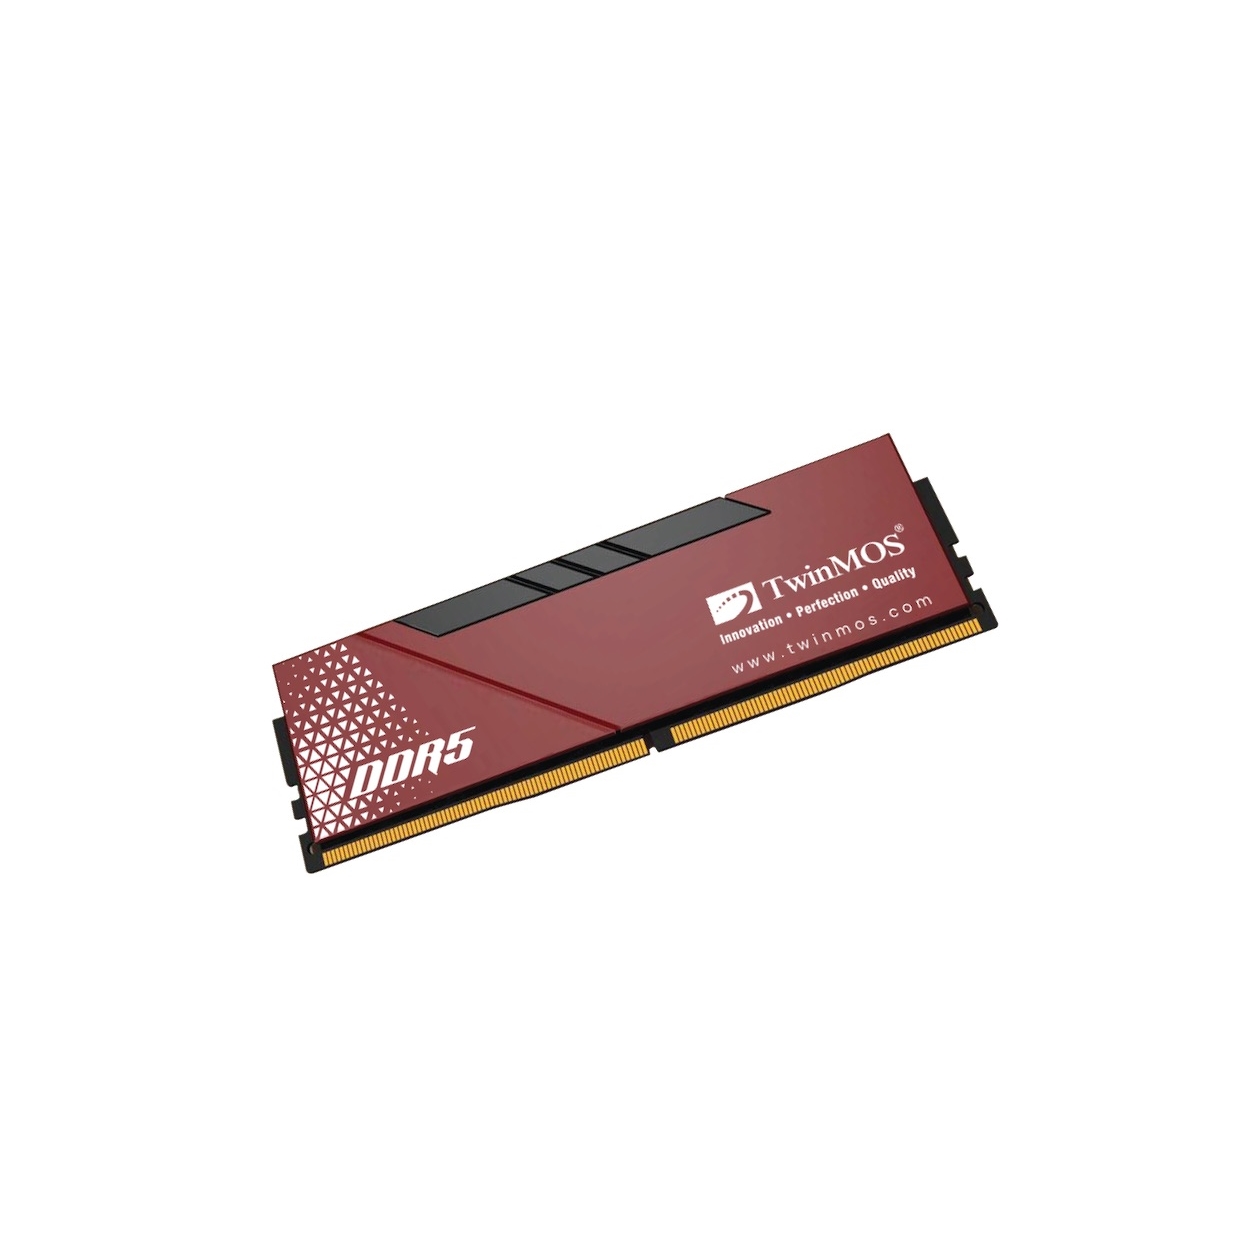 TWINMOS 32GB 5600MHz DDR5 SOĞUTUCULU PC RAM TMD532GB5600U46